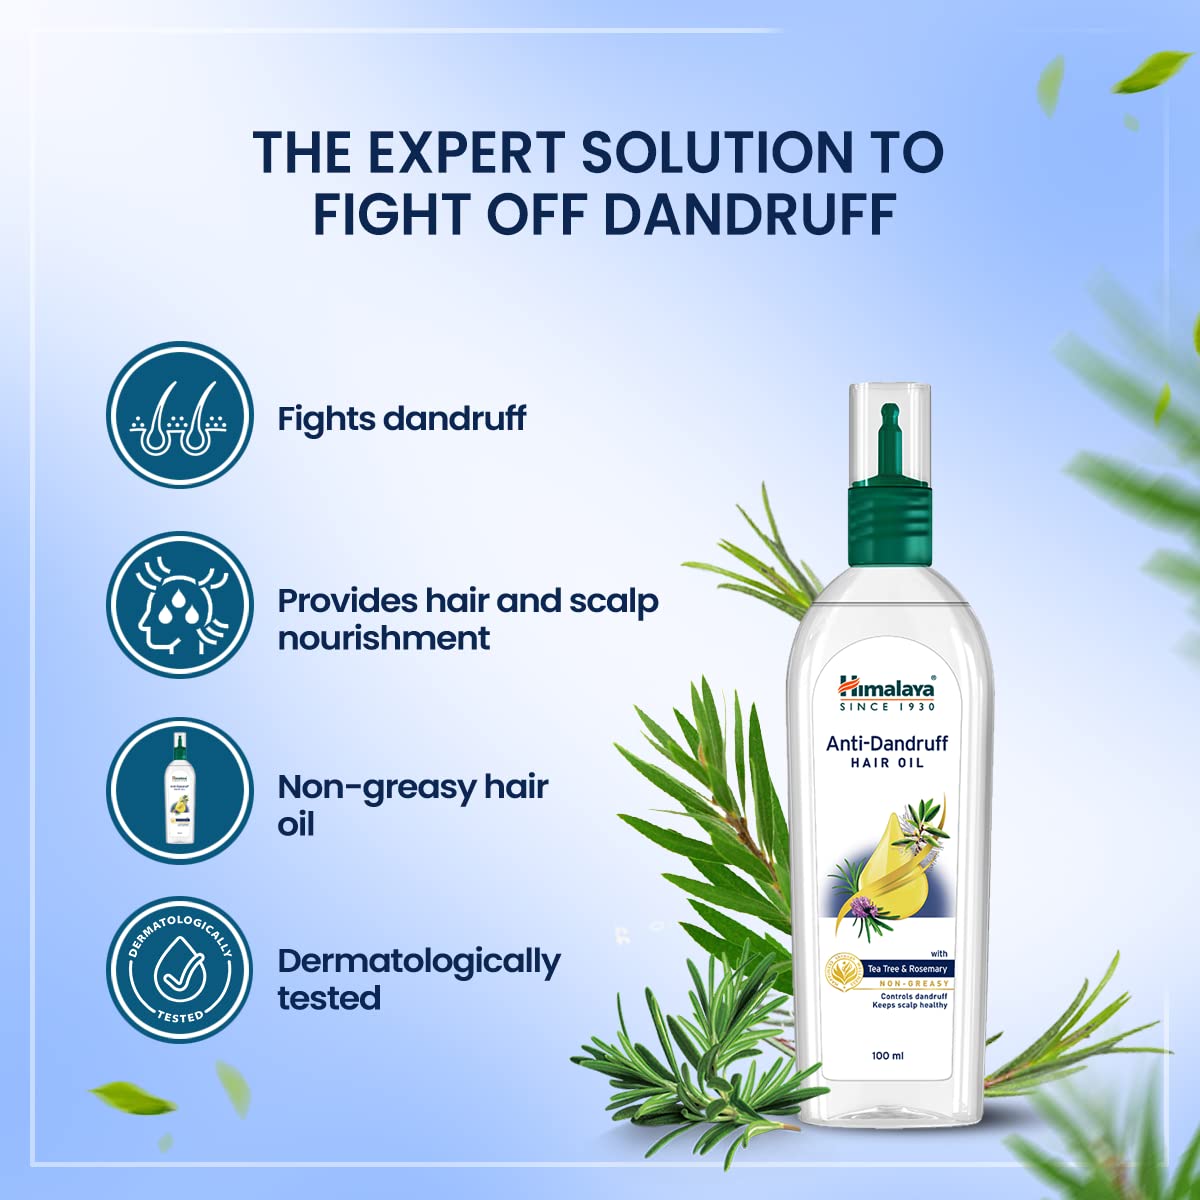 Himalaya Anti Dandruff Hair Oil 200ml